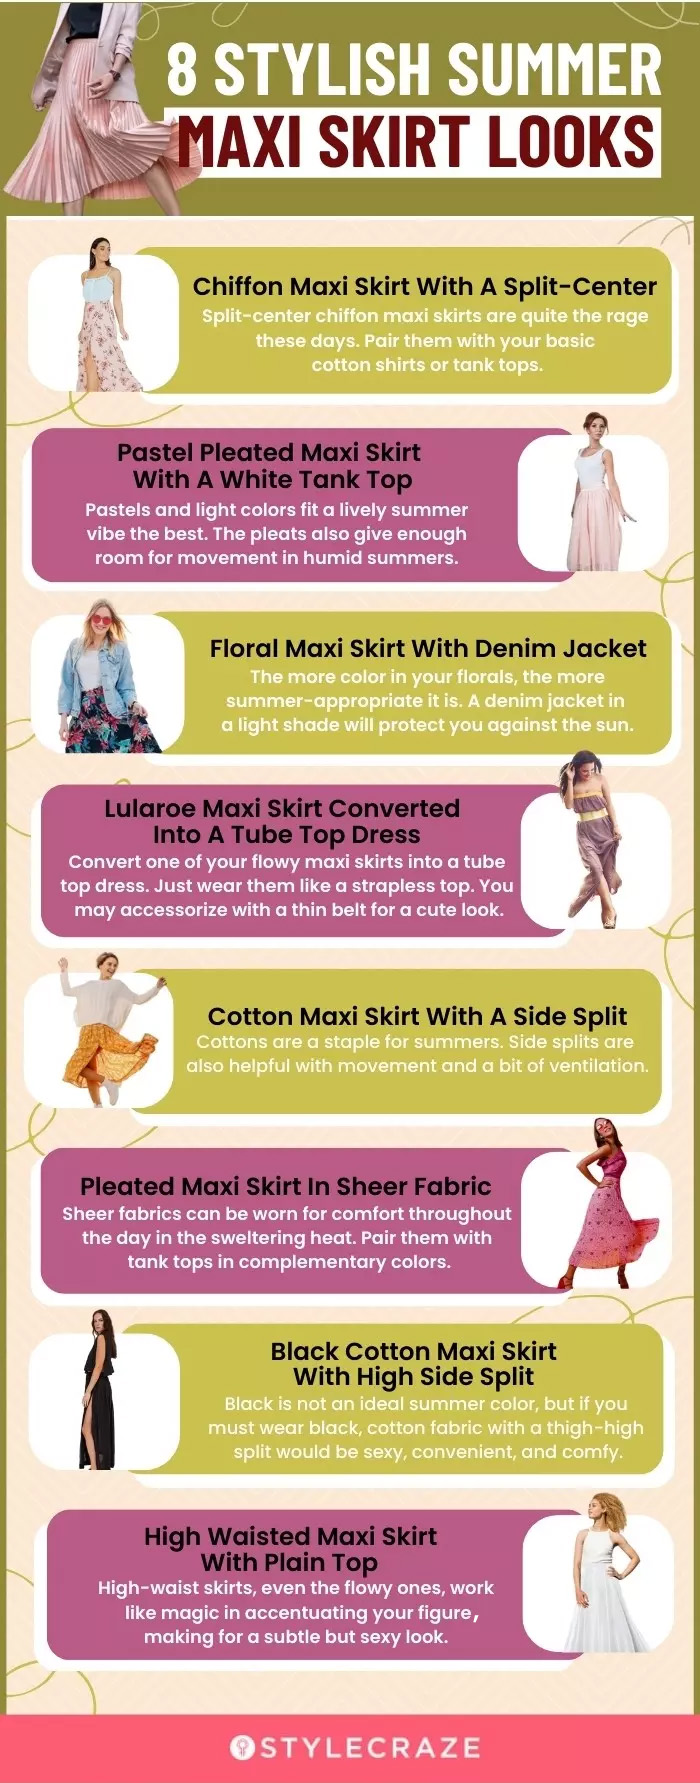 8 stylish summer maxi skrit looks (infographic)